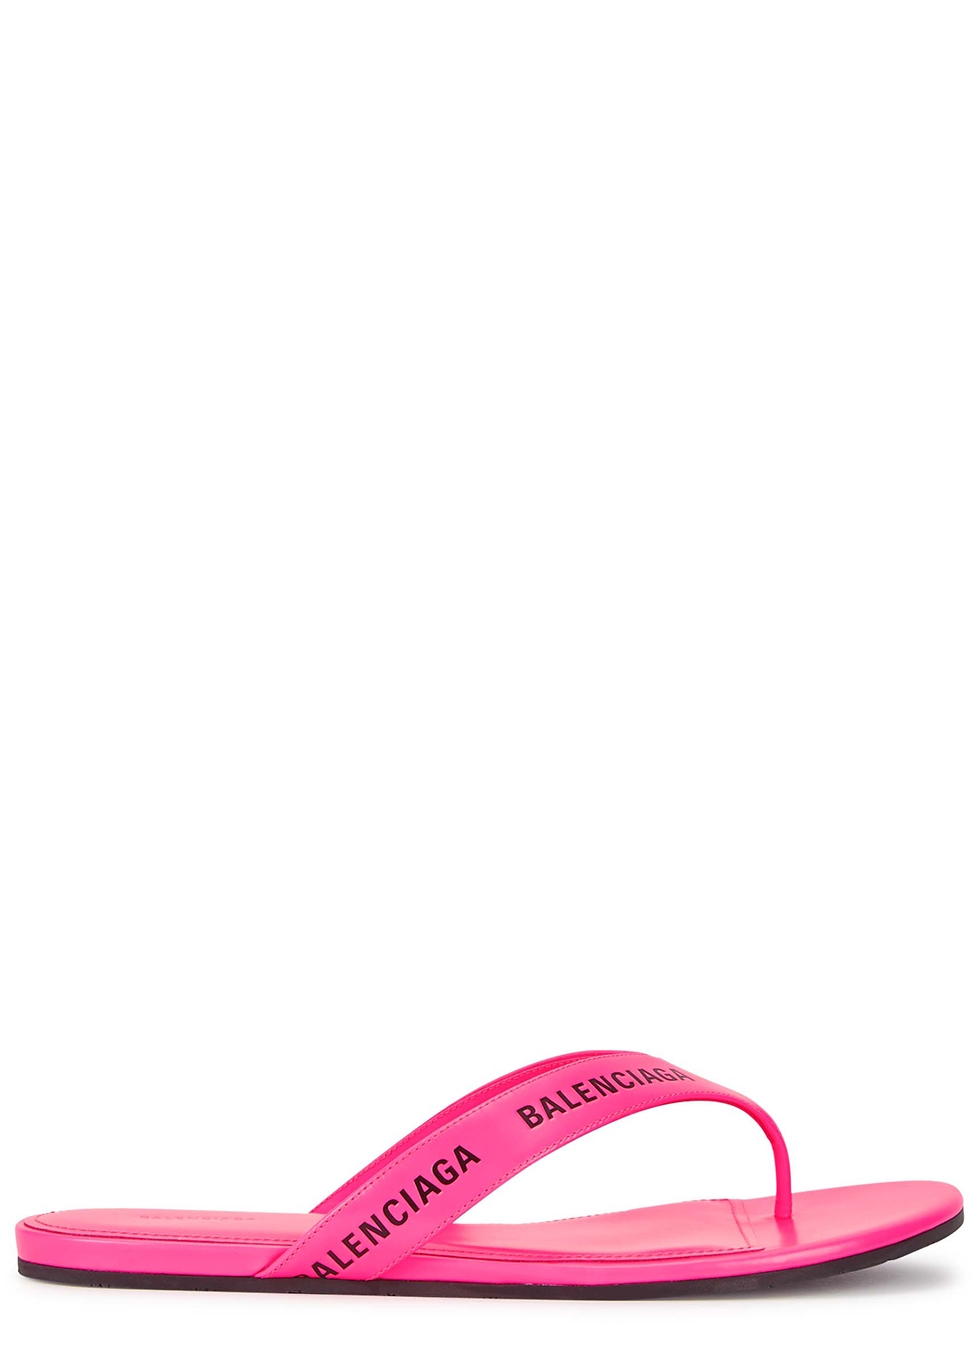 pink brand flip flops